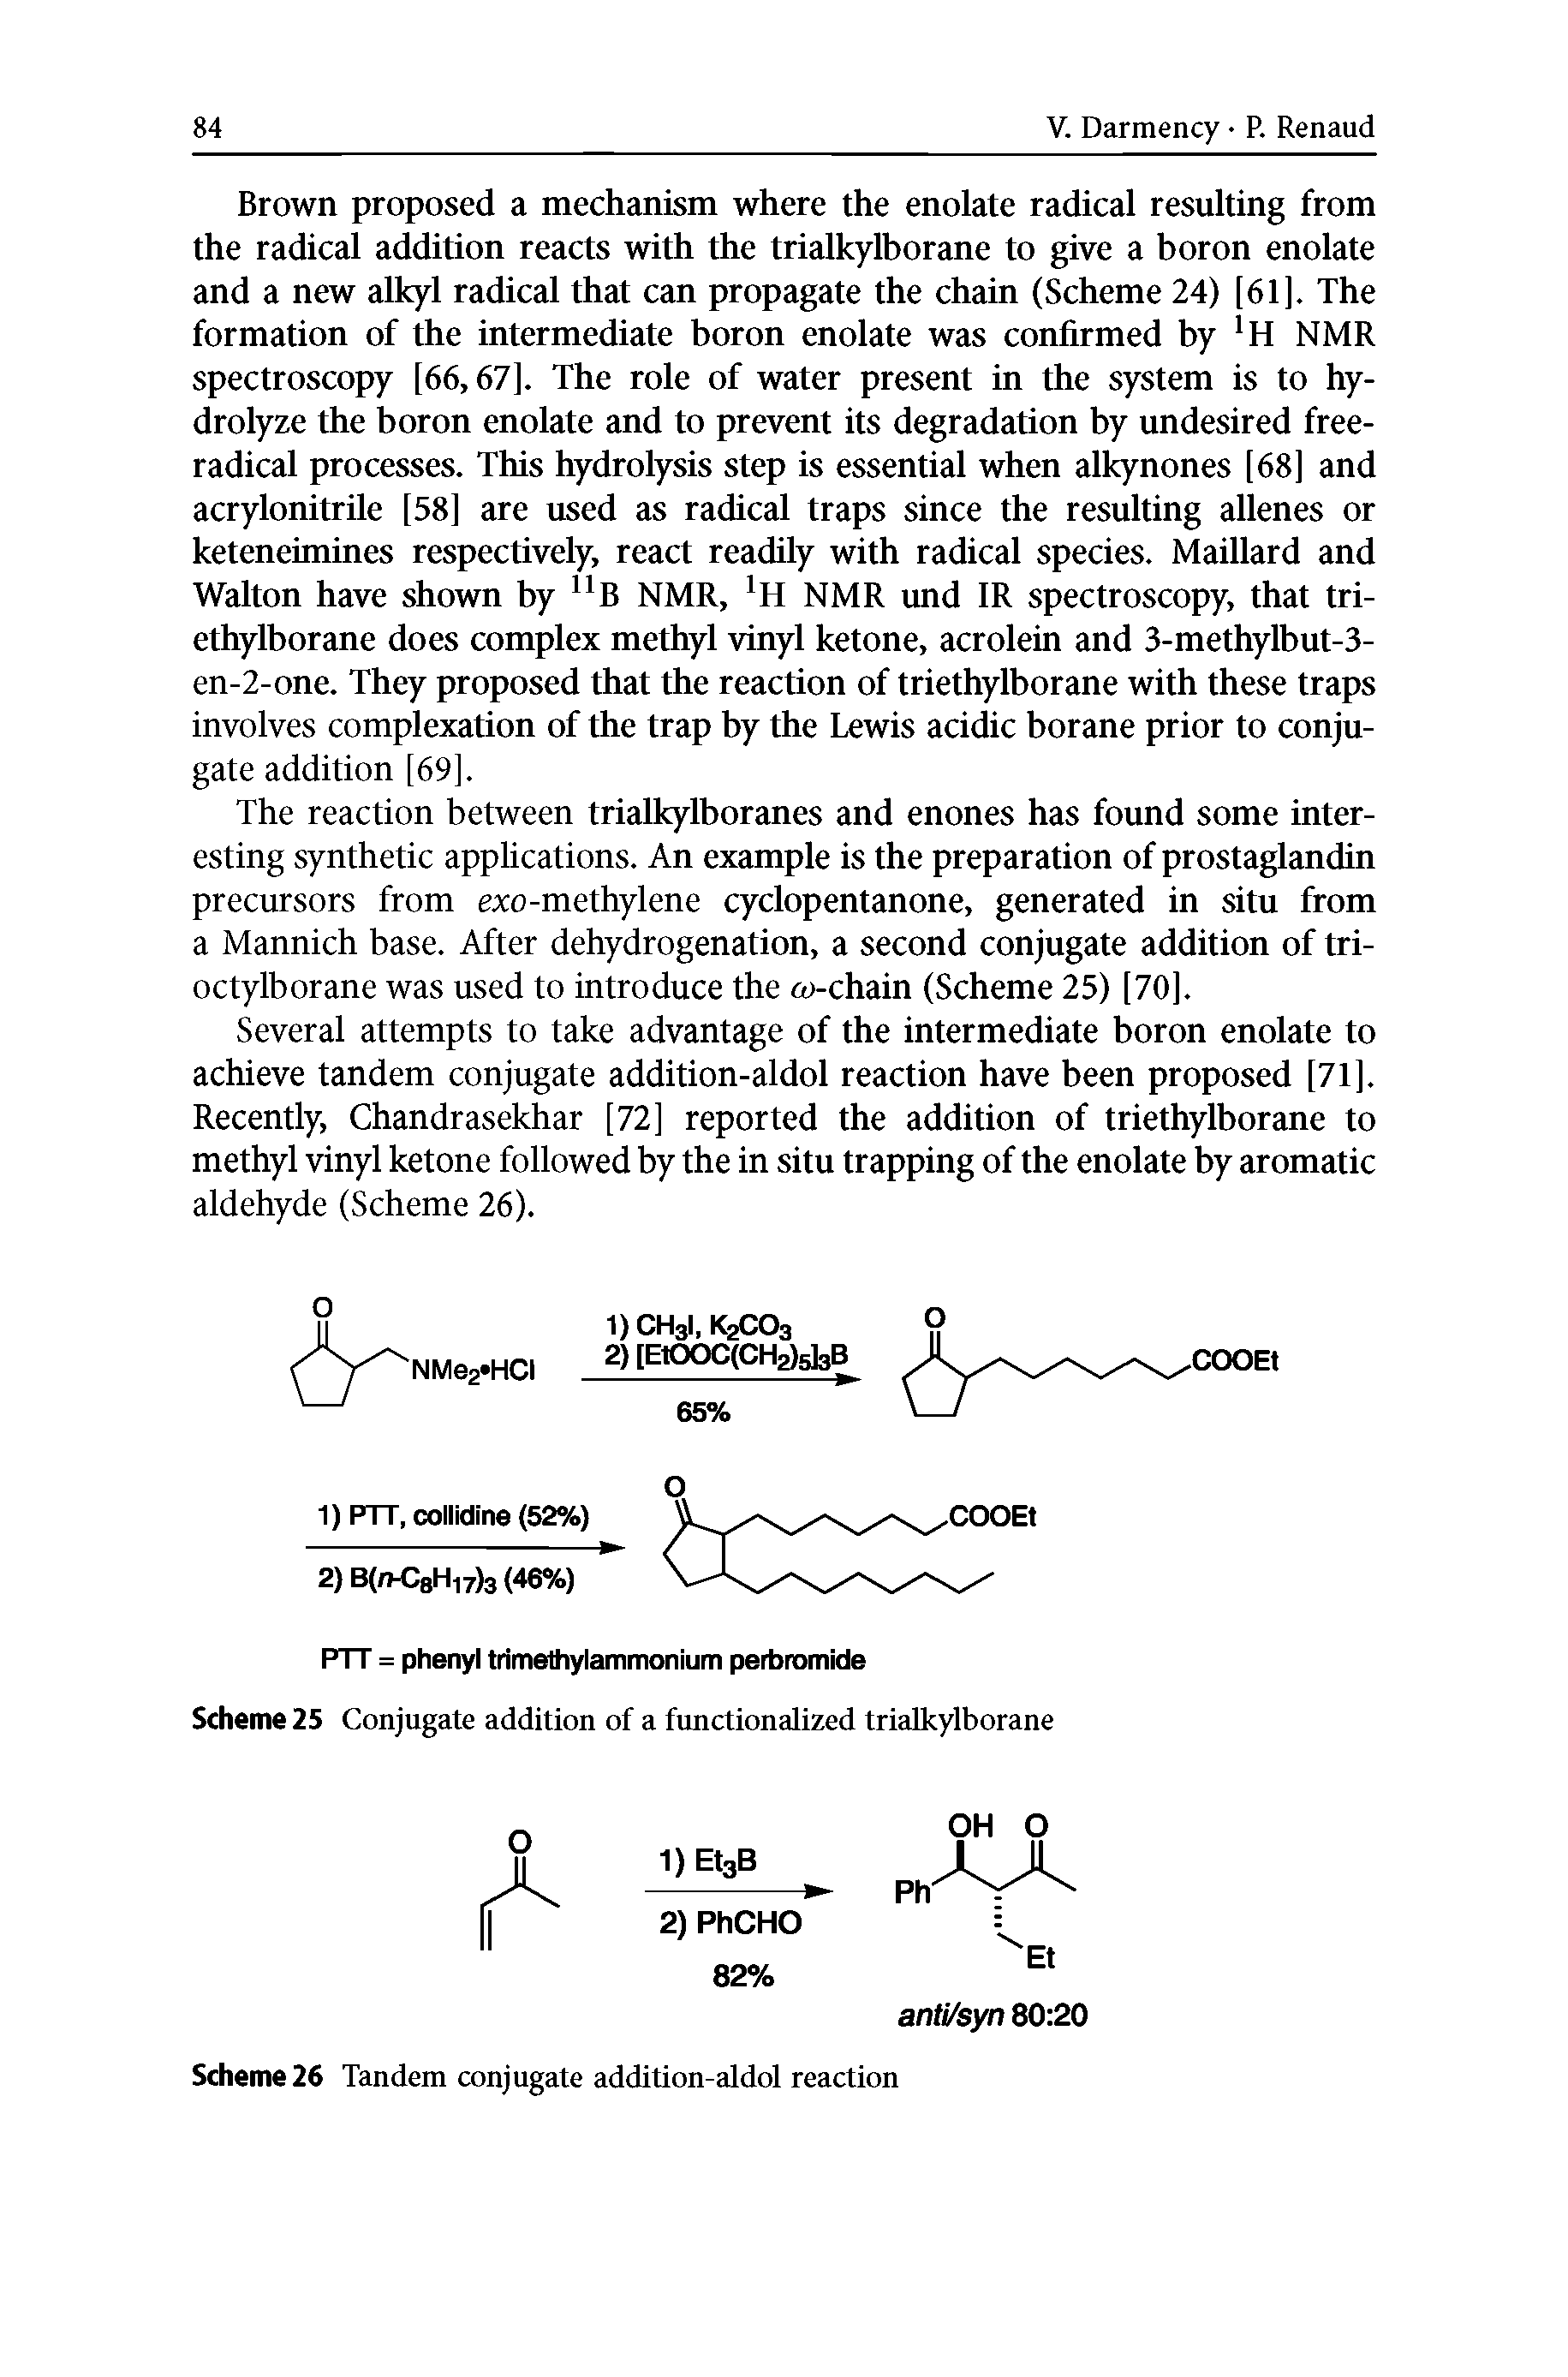 Scheme 26 Tandem conjugate addition-aldol reaction...